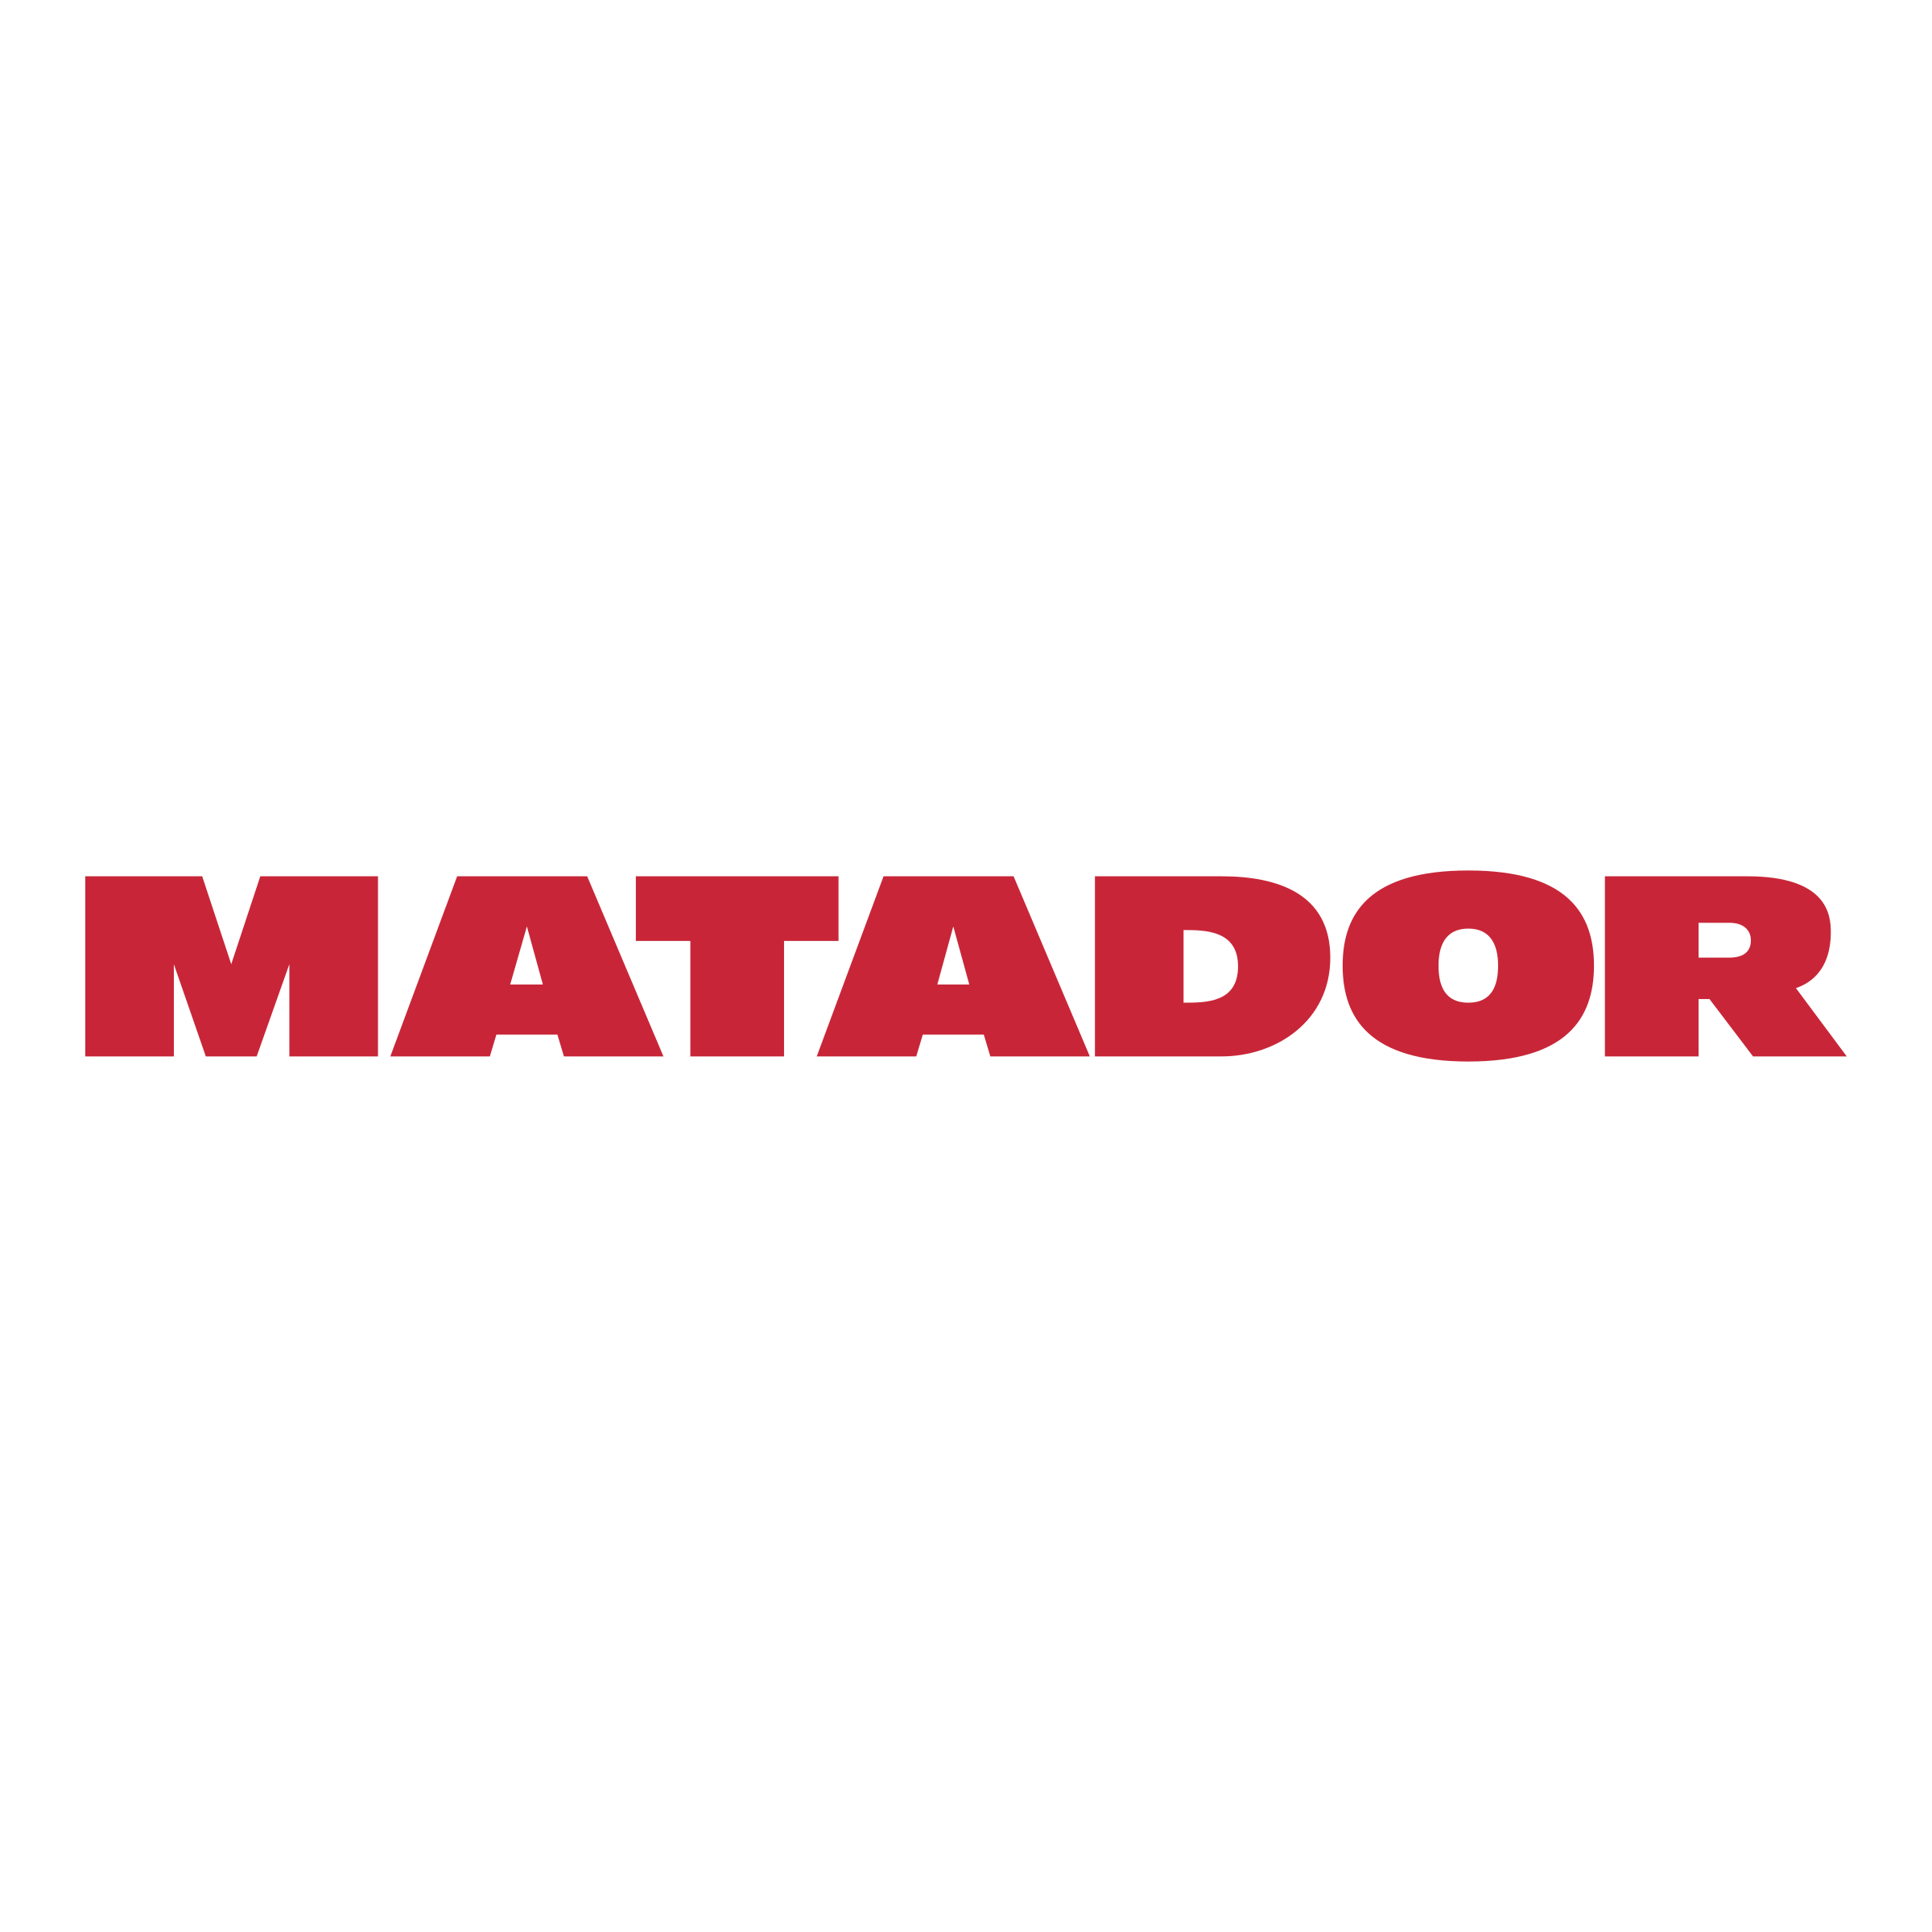 MATADOR